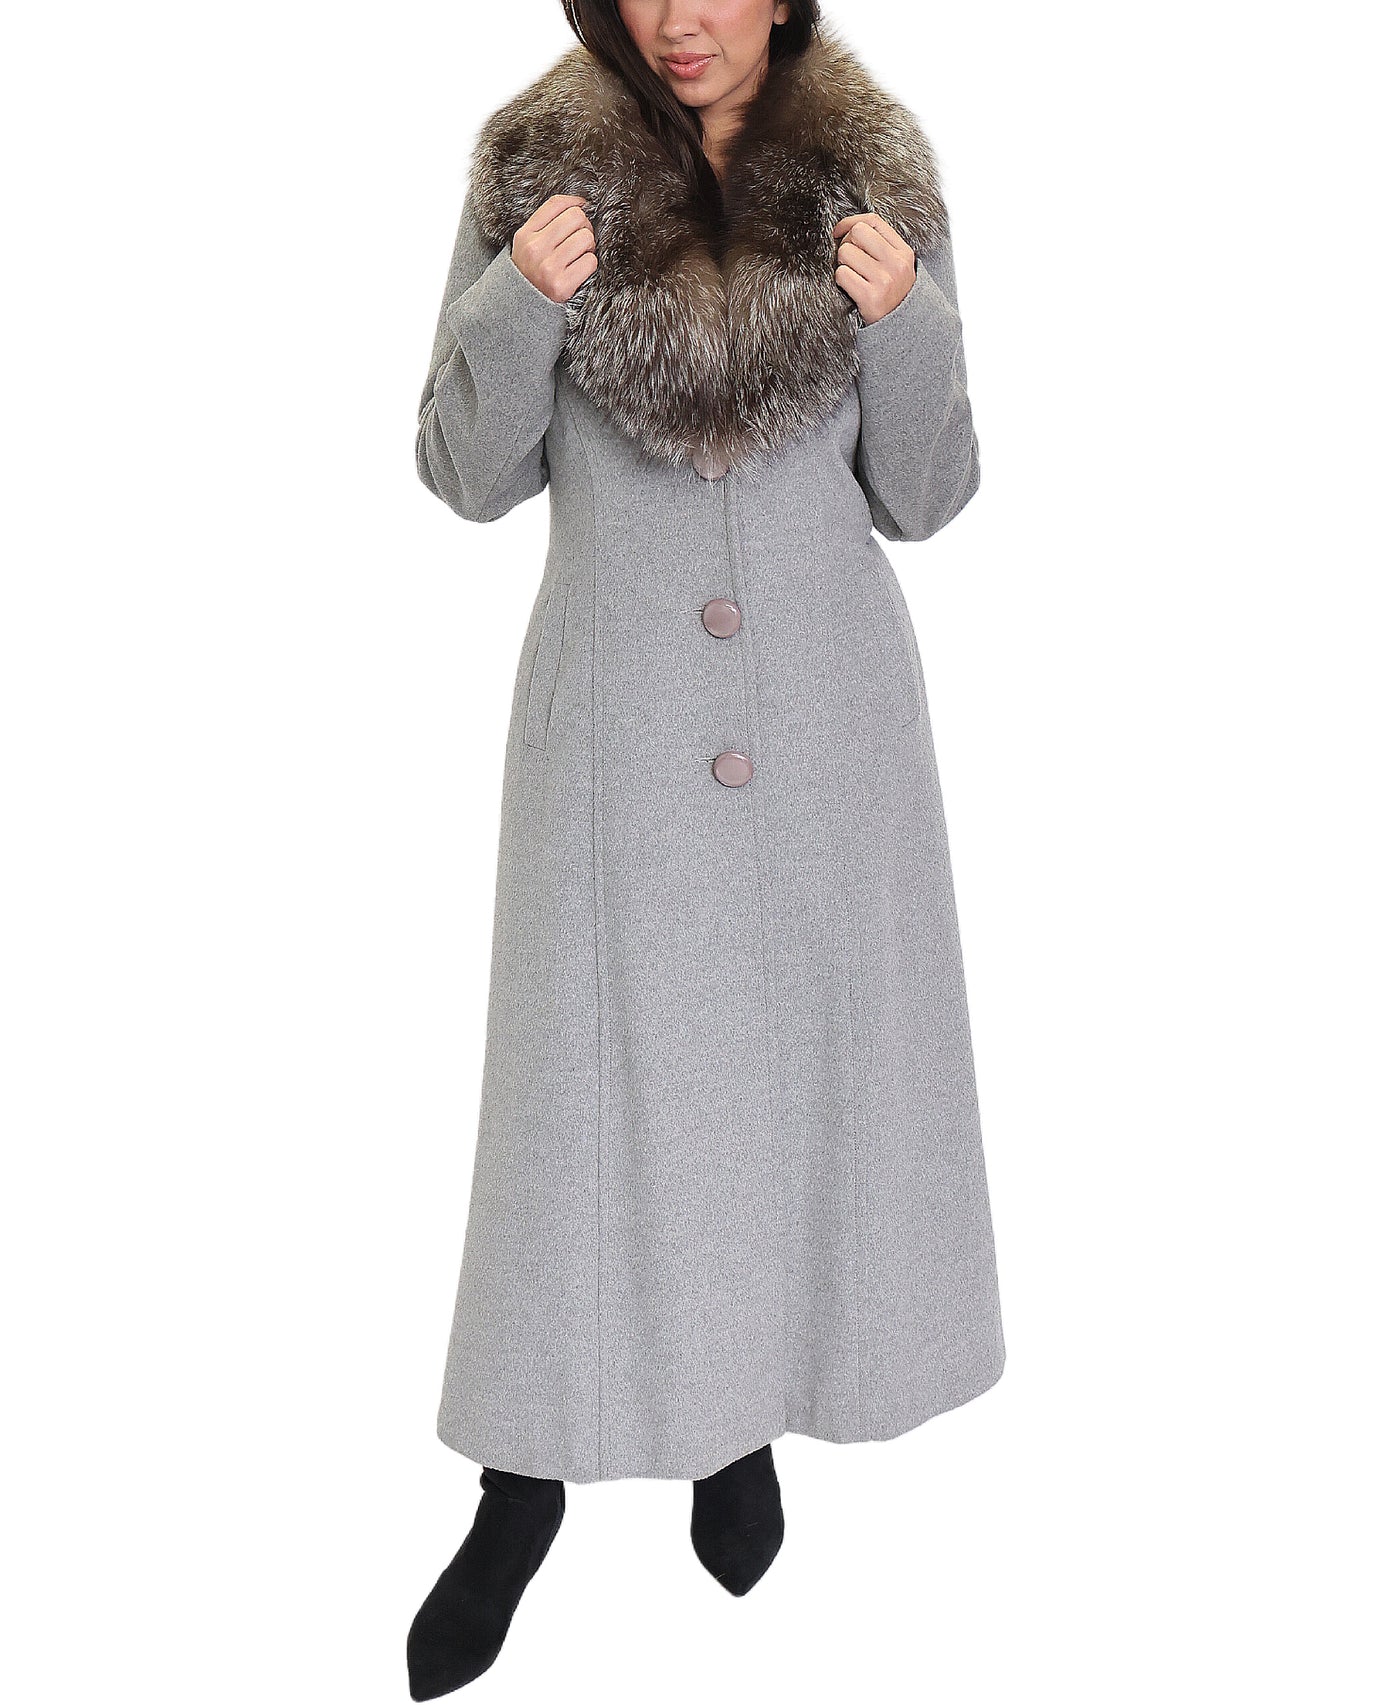 Cashmere Coat w/ Fox Fur Collar image 1